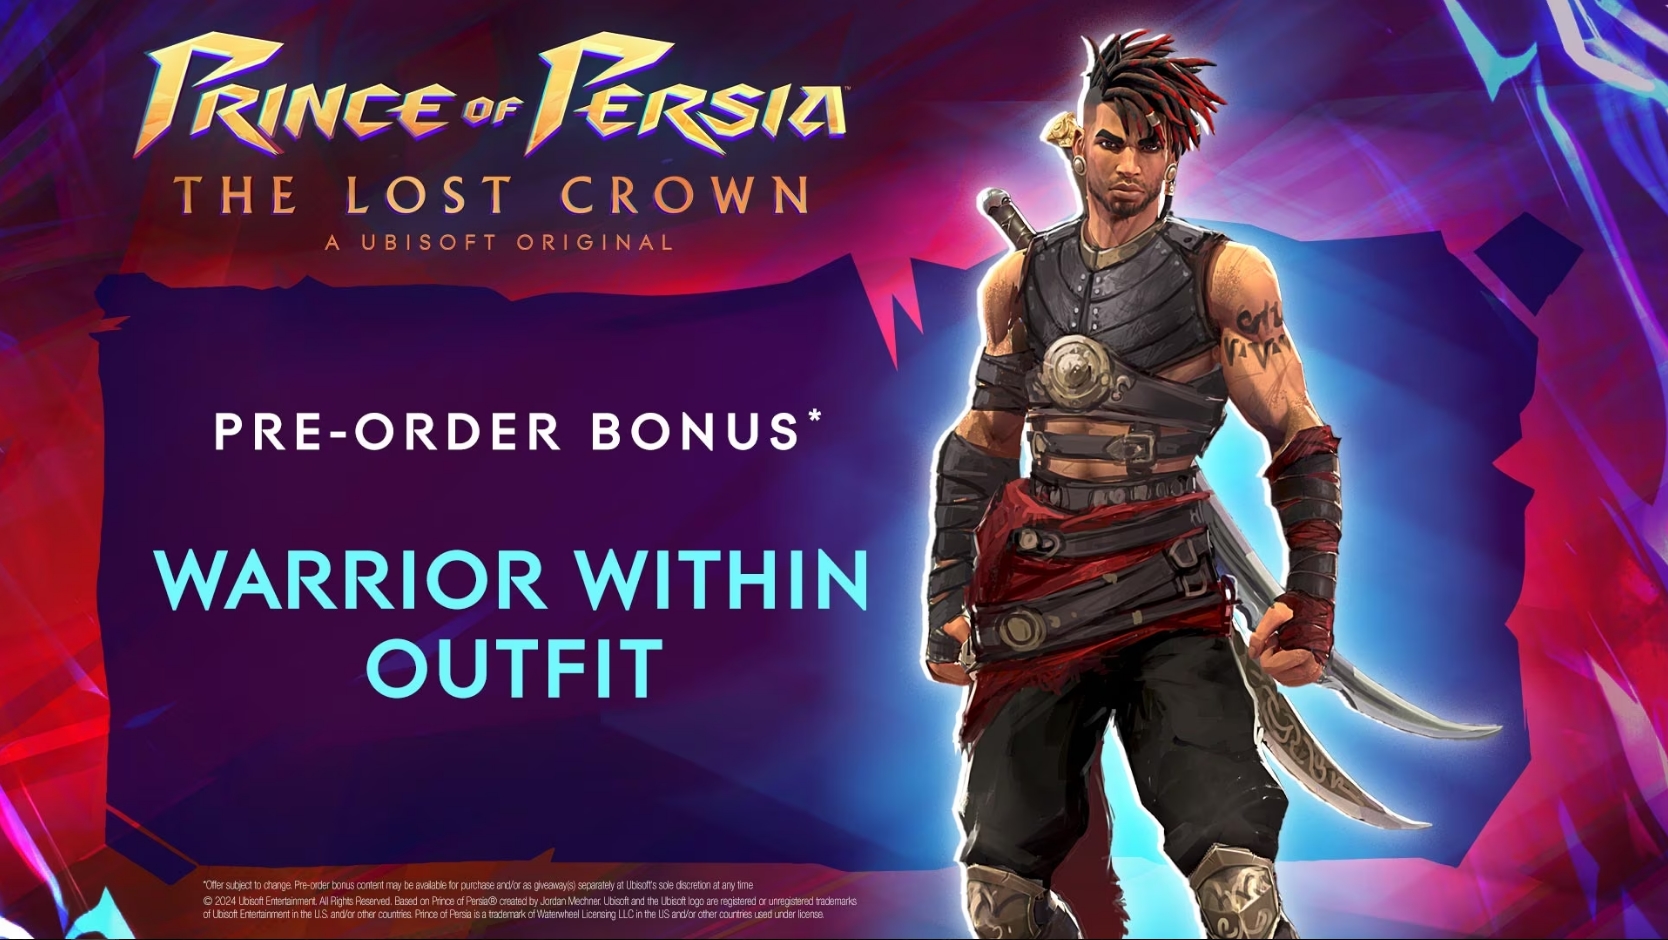 Prince of Persia the lost crown bonus preorder bonus